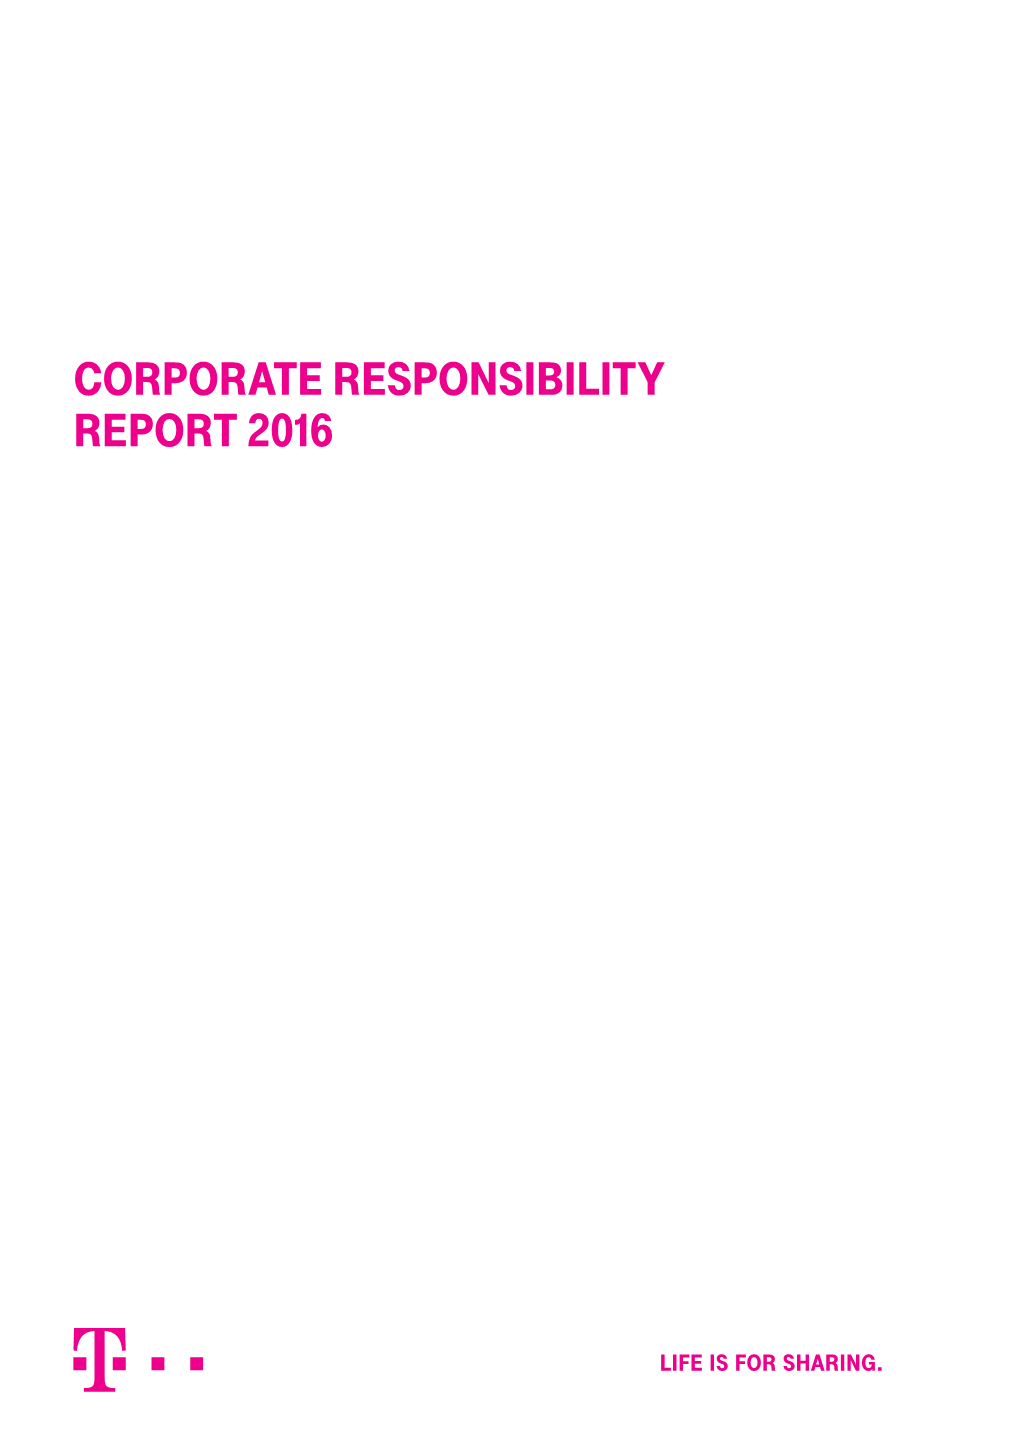 Corporate Responsibility Report 2016 2